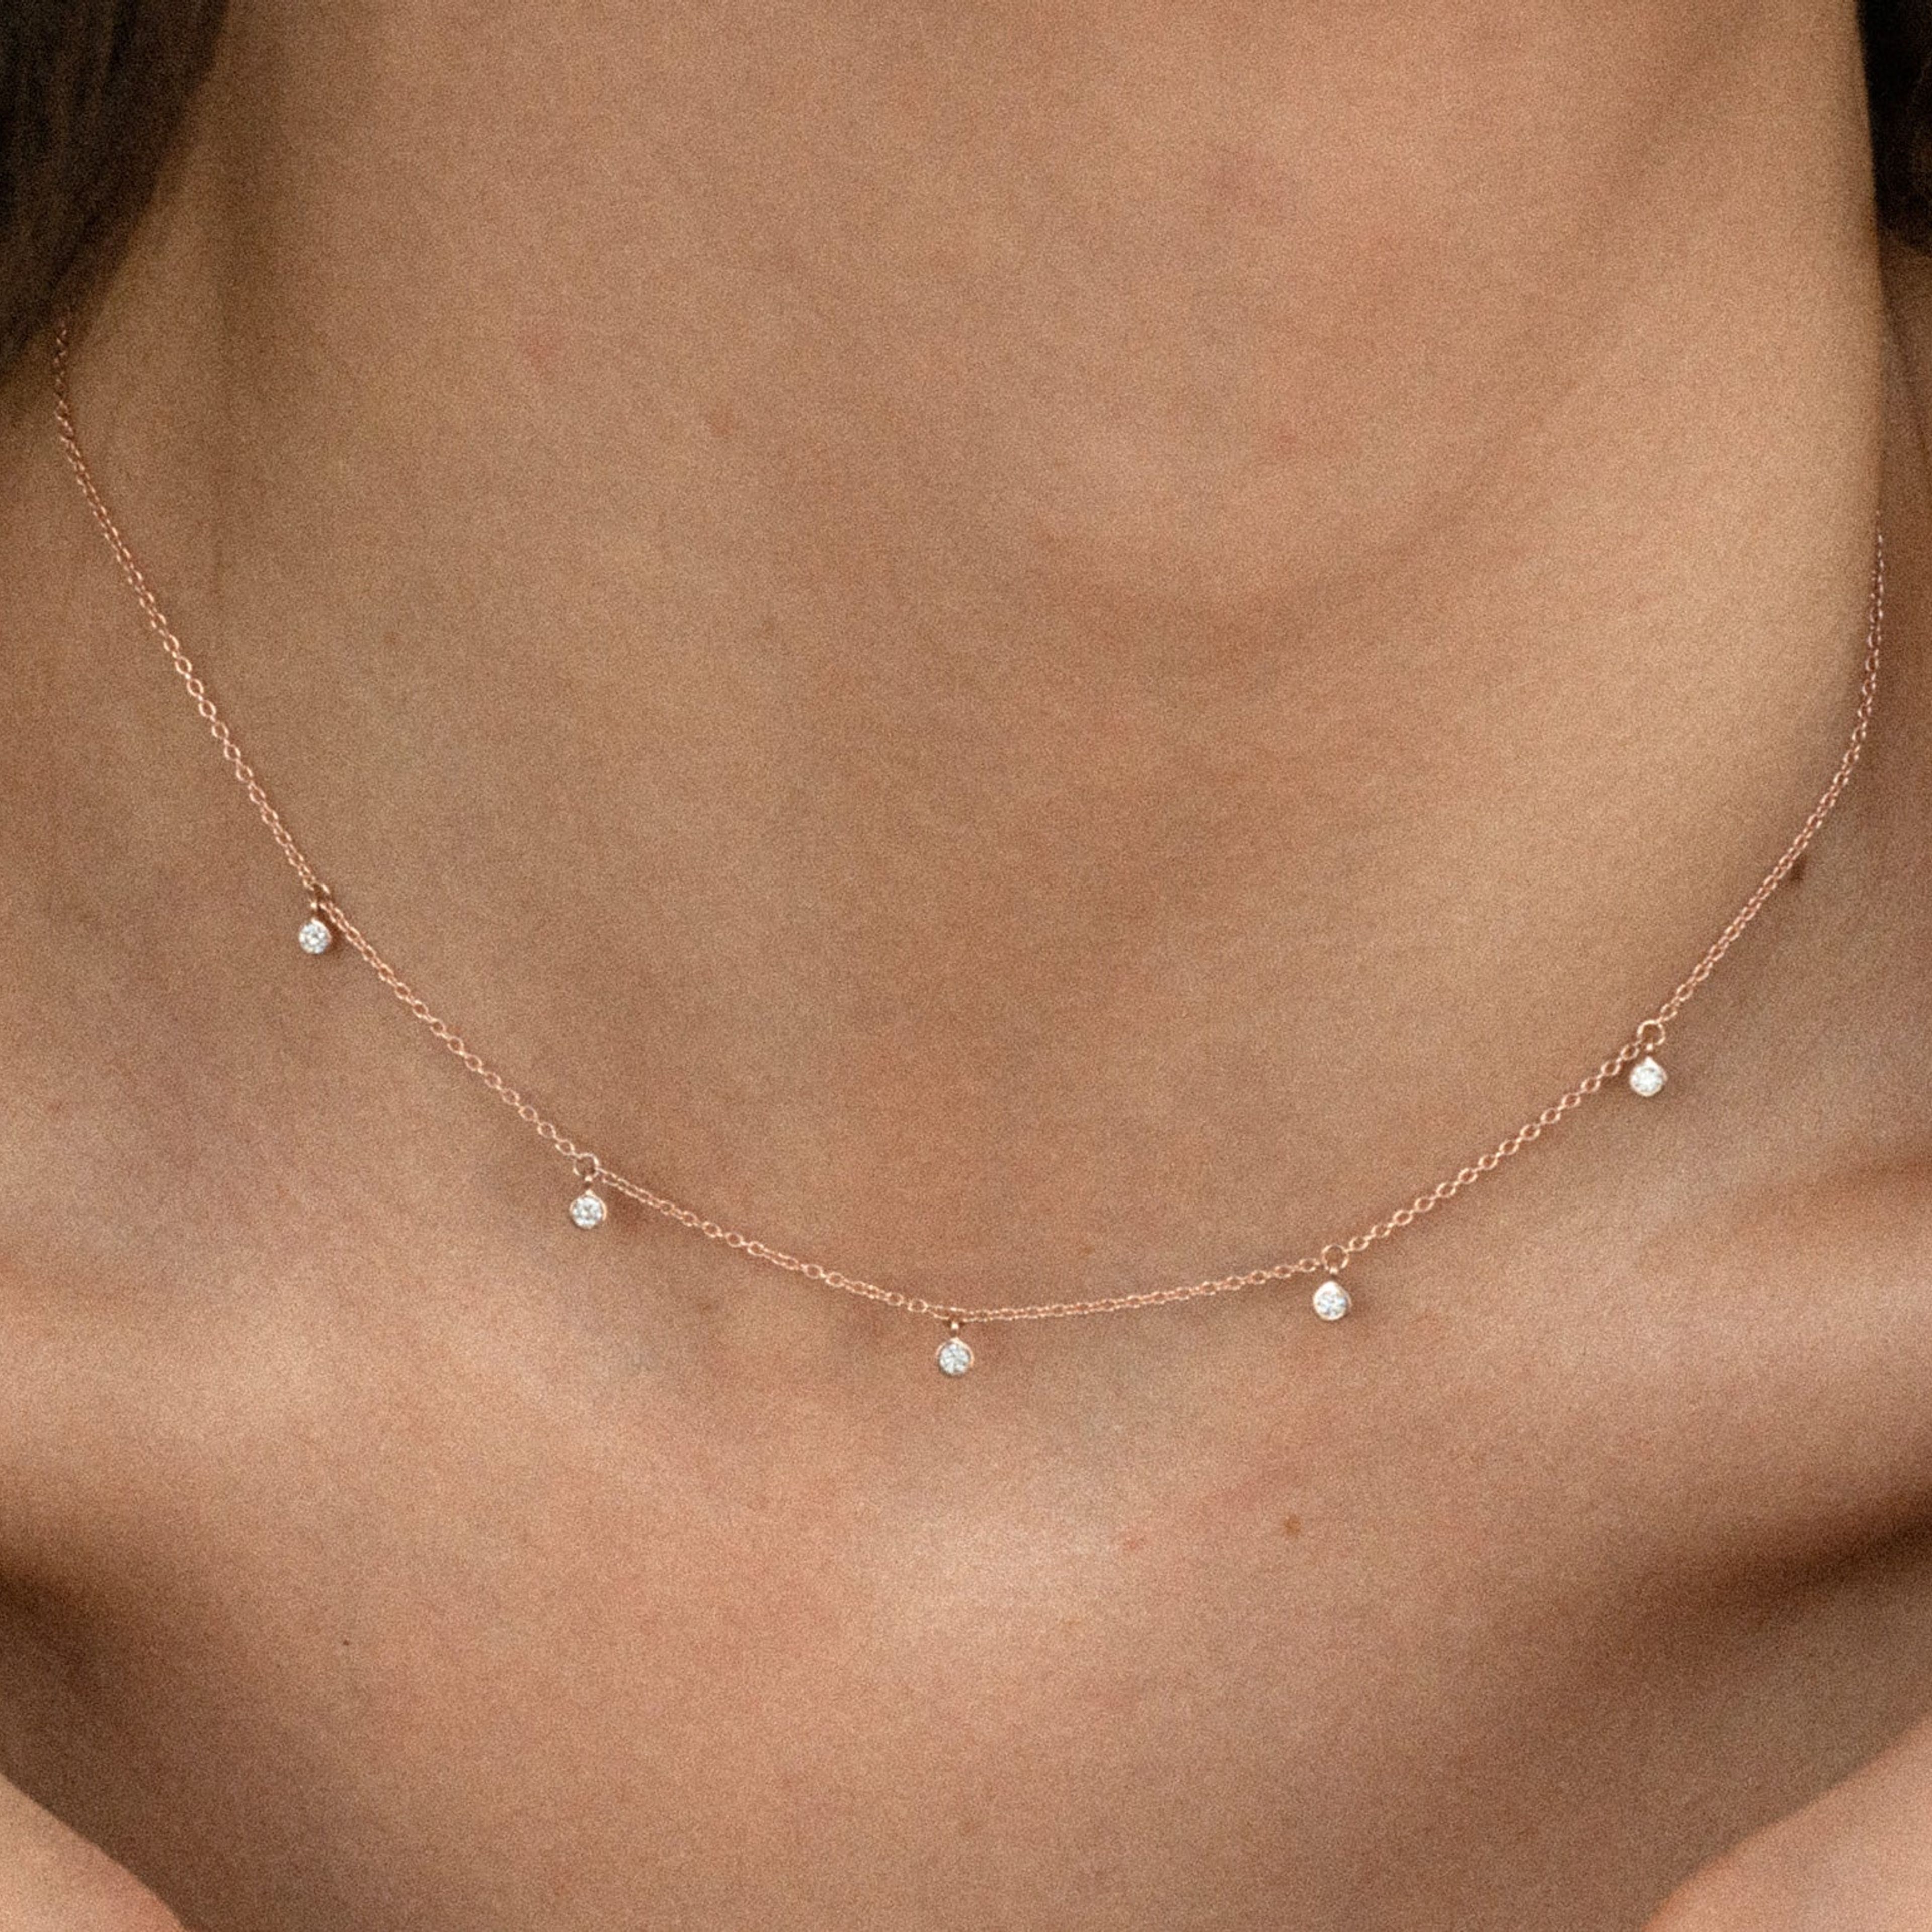 The 5 Diamond Necklace